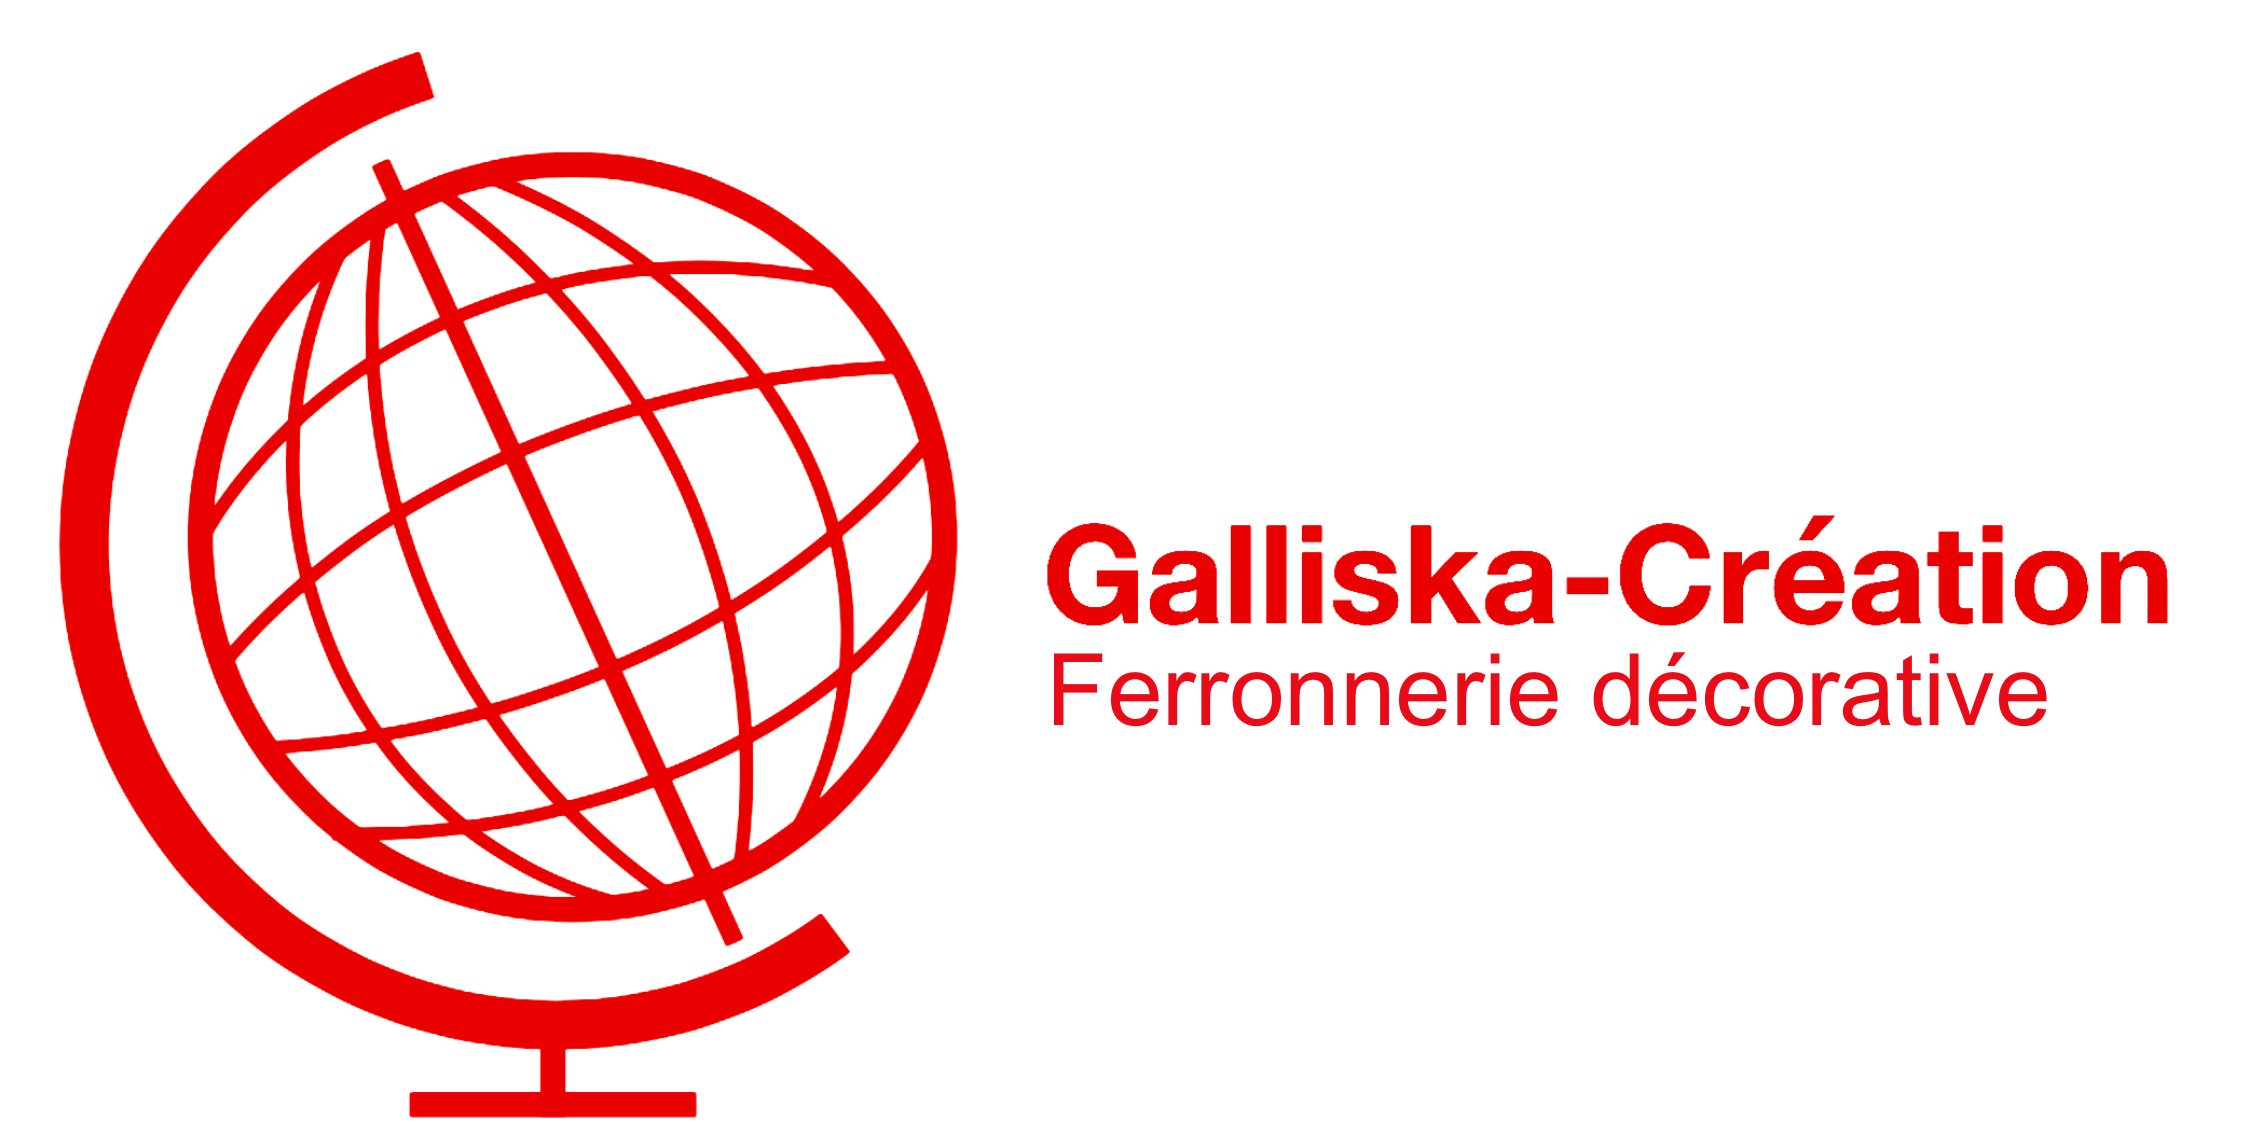 Galliska-Création